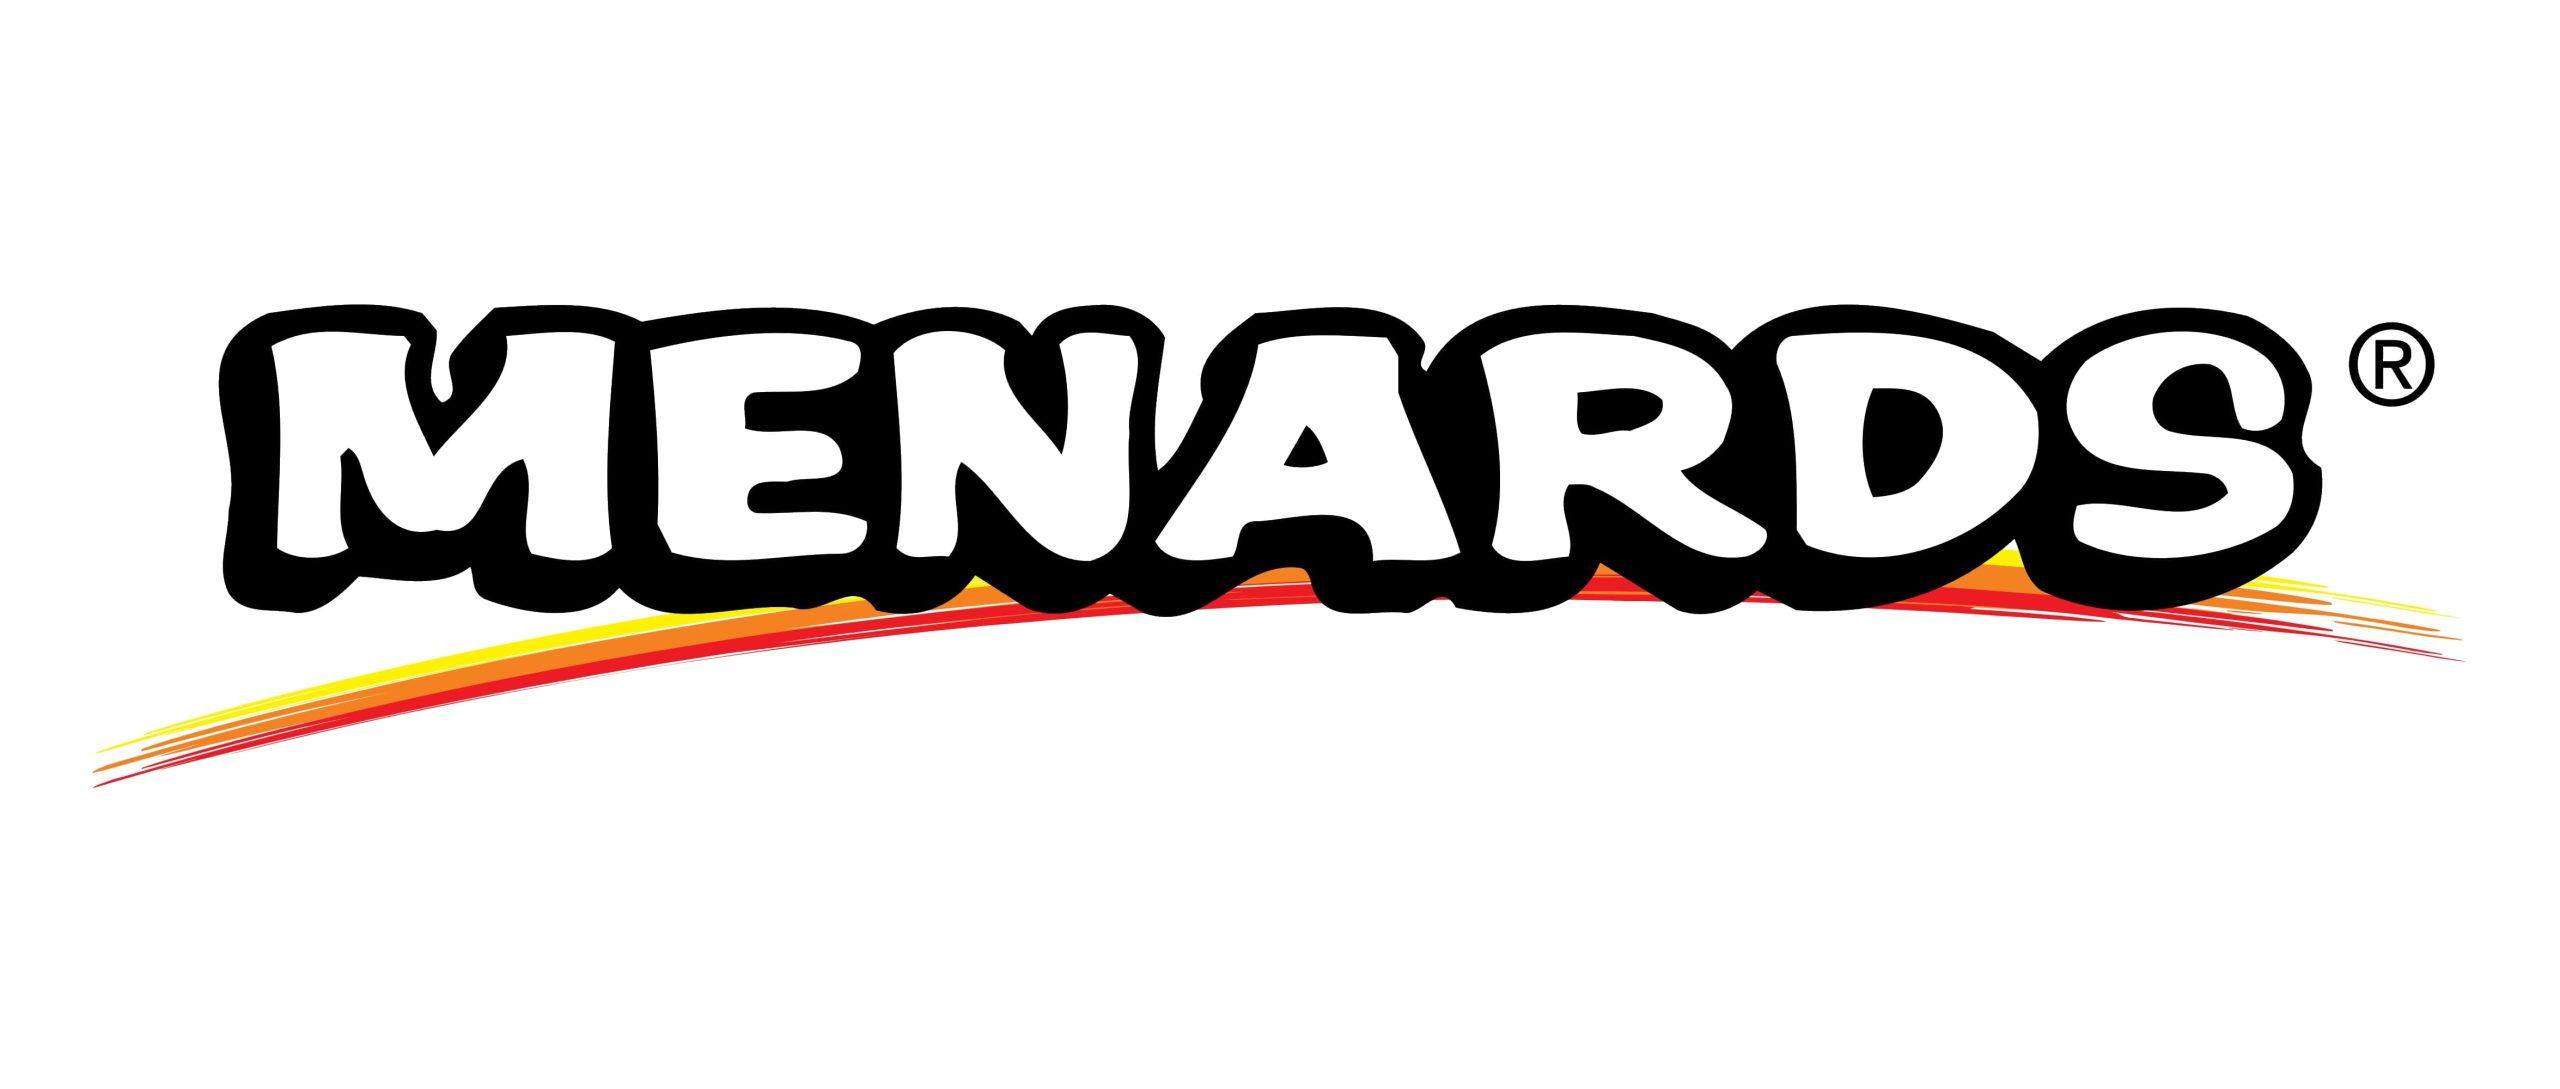 Menards-logo